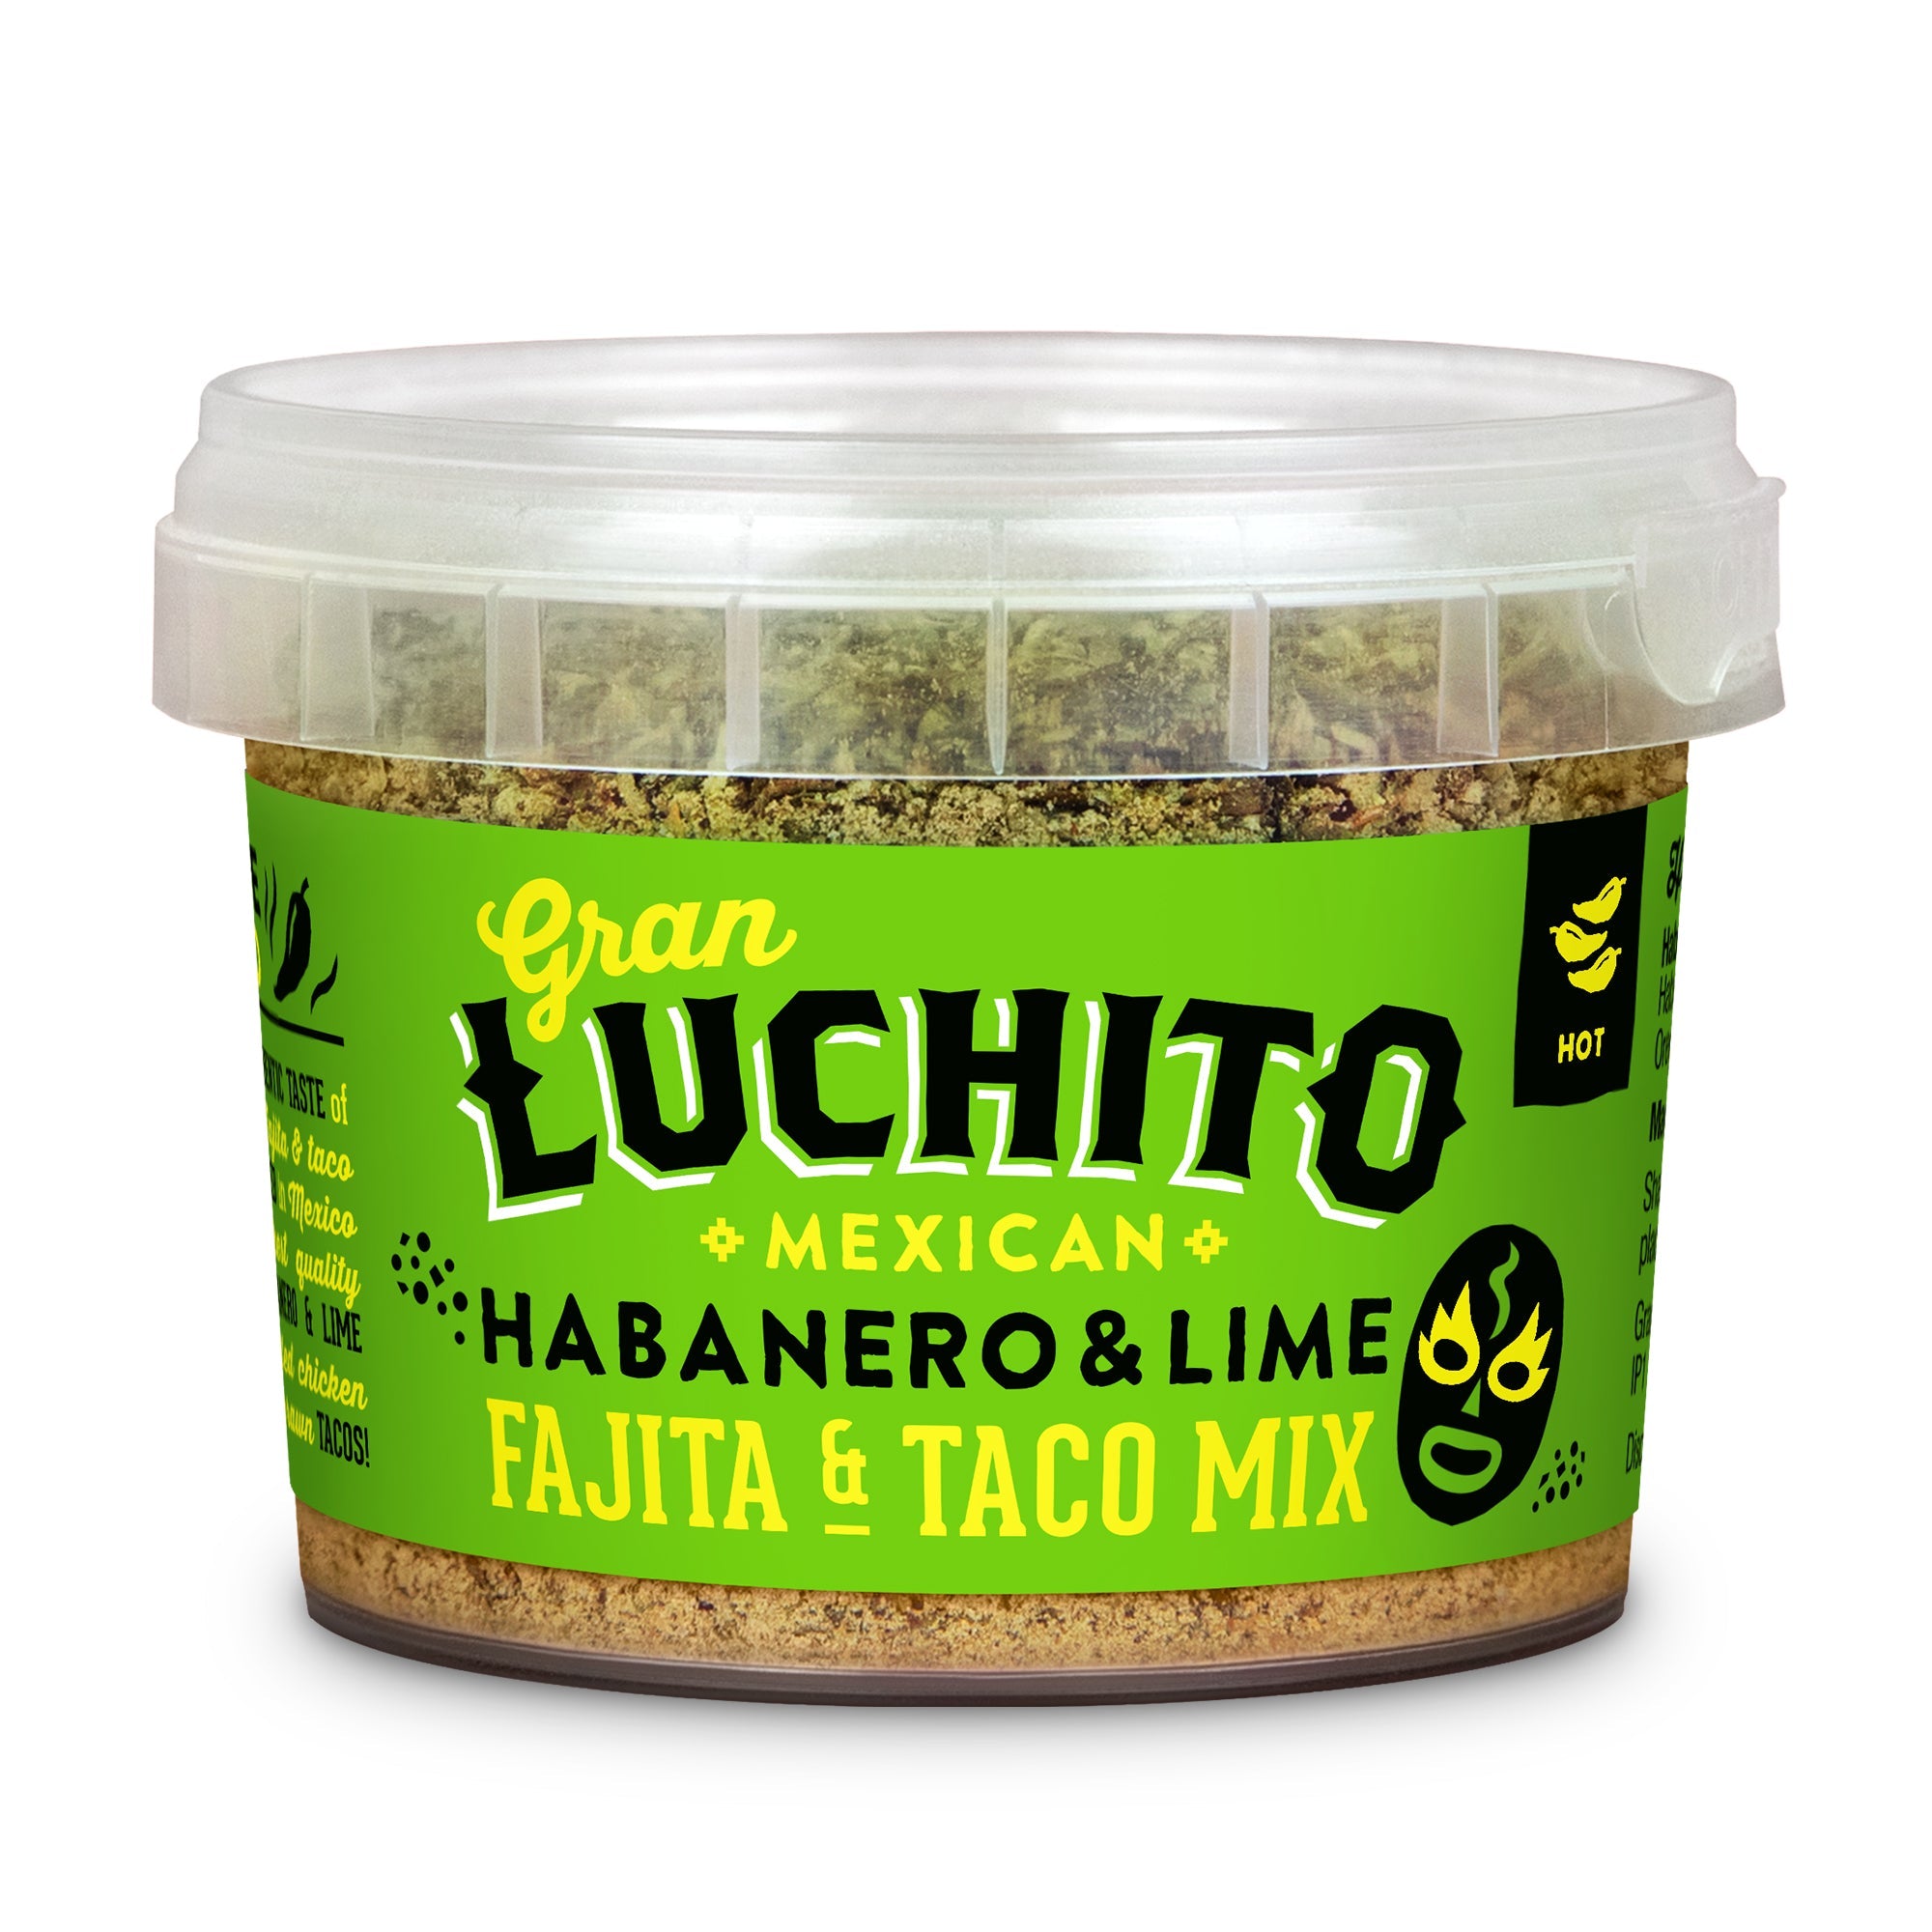 Gran Luchito Fajita & Taco Mix